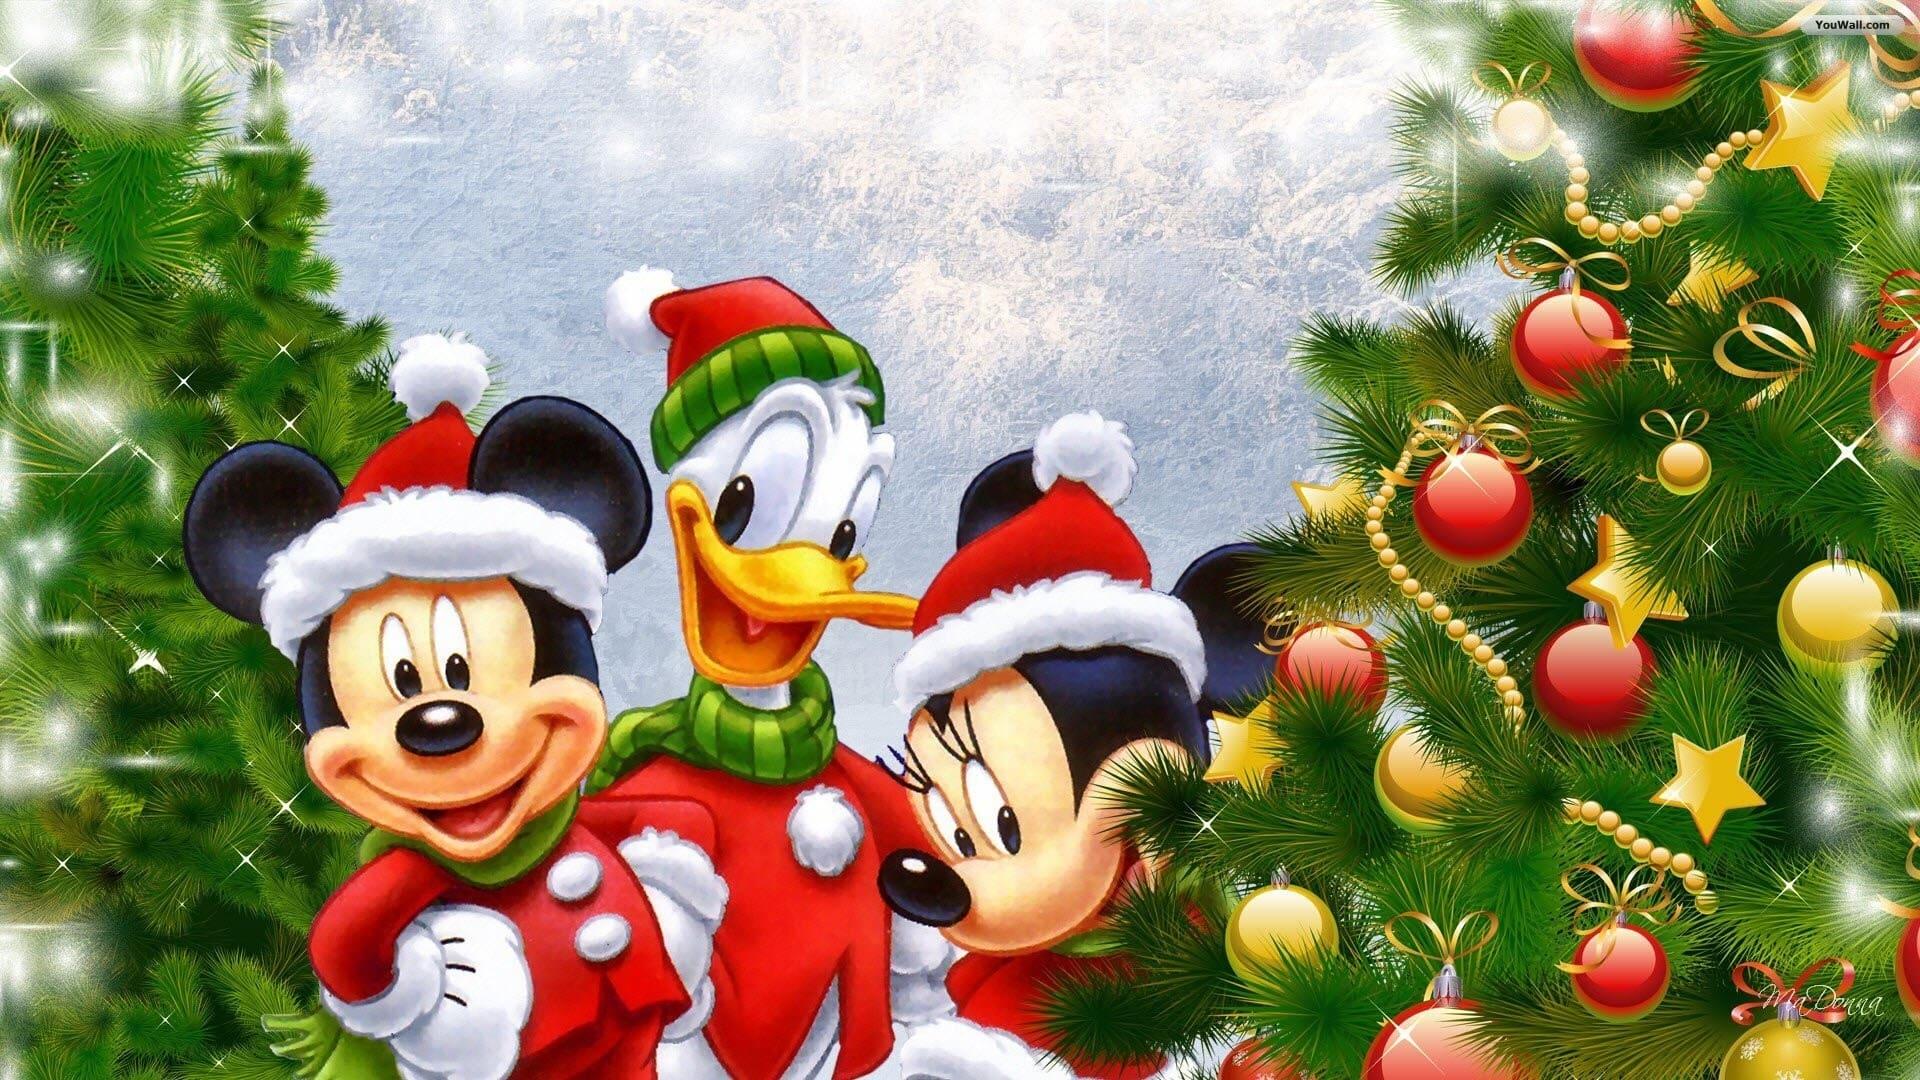 A Disney Christmas Gift backdrop